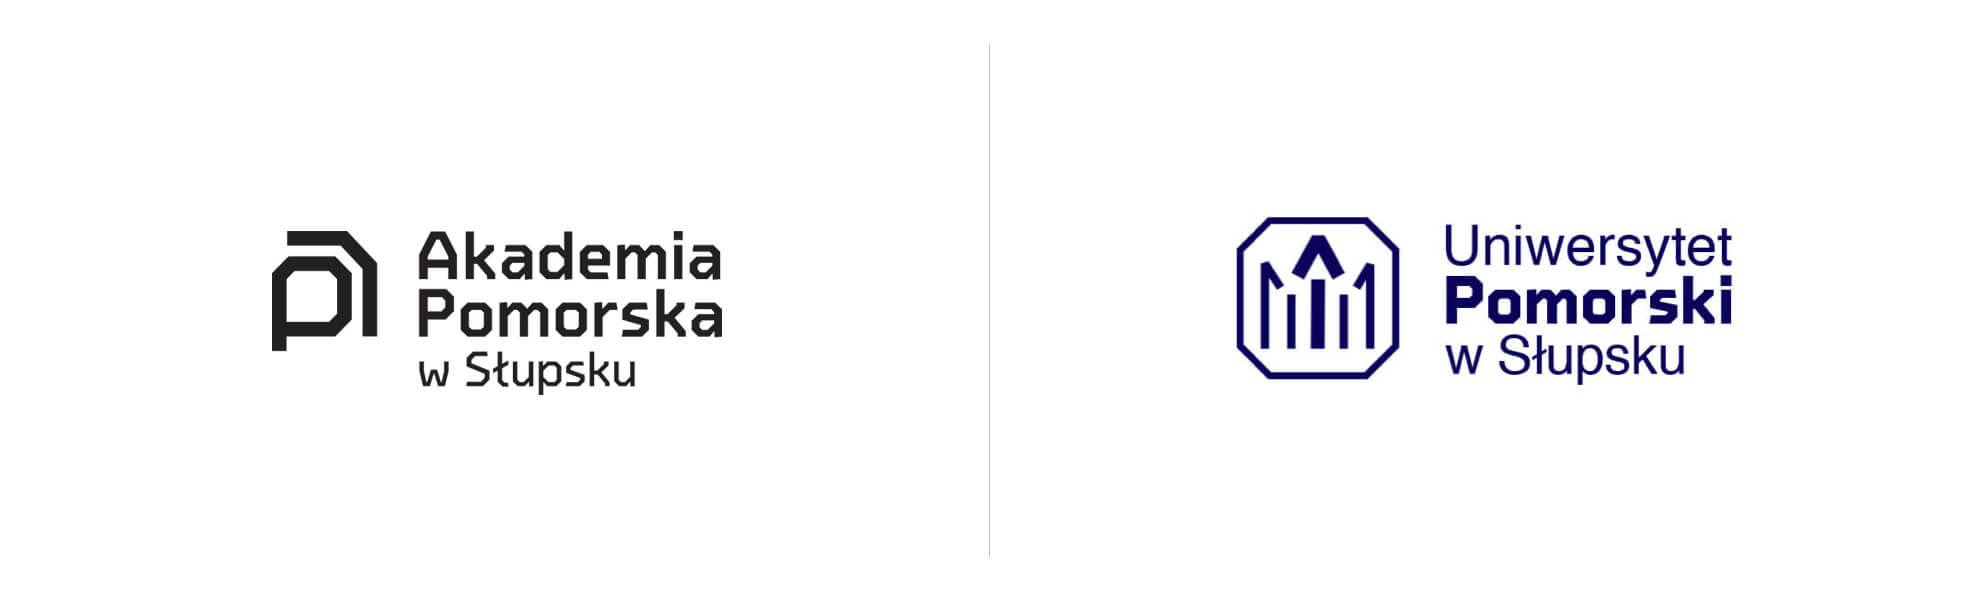 Uniwersytet Pomorski w Słupsku – nowe logo i stare logo